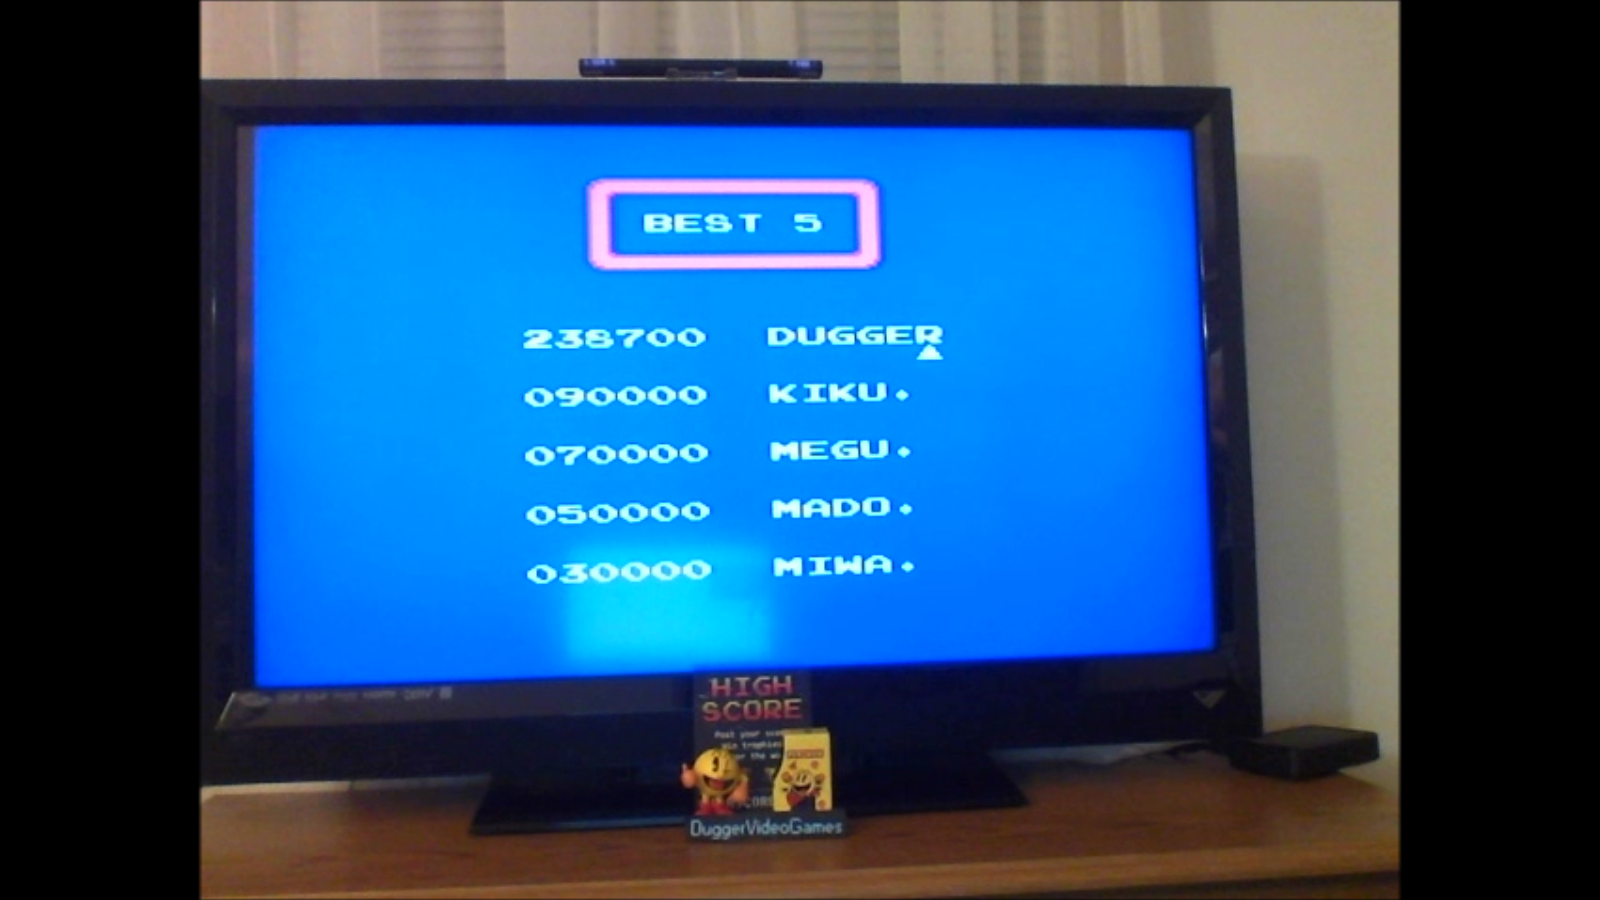 DuggerVideoGames: Binary Land (NES/Famicom Emulated) 238,700 points on 2017-01-14 01:23:11